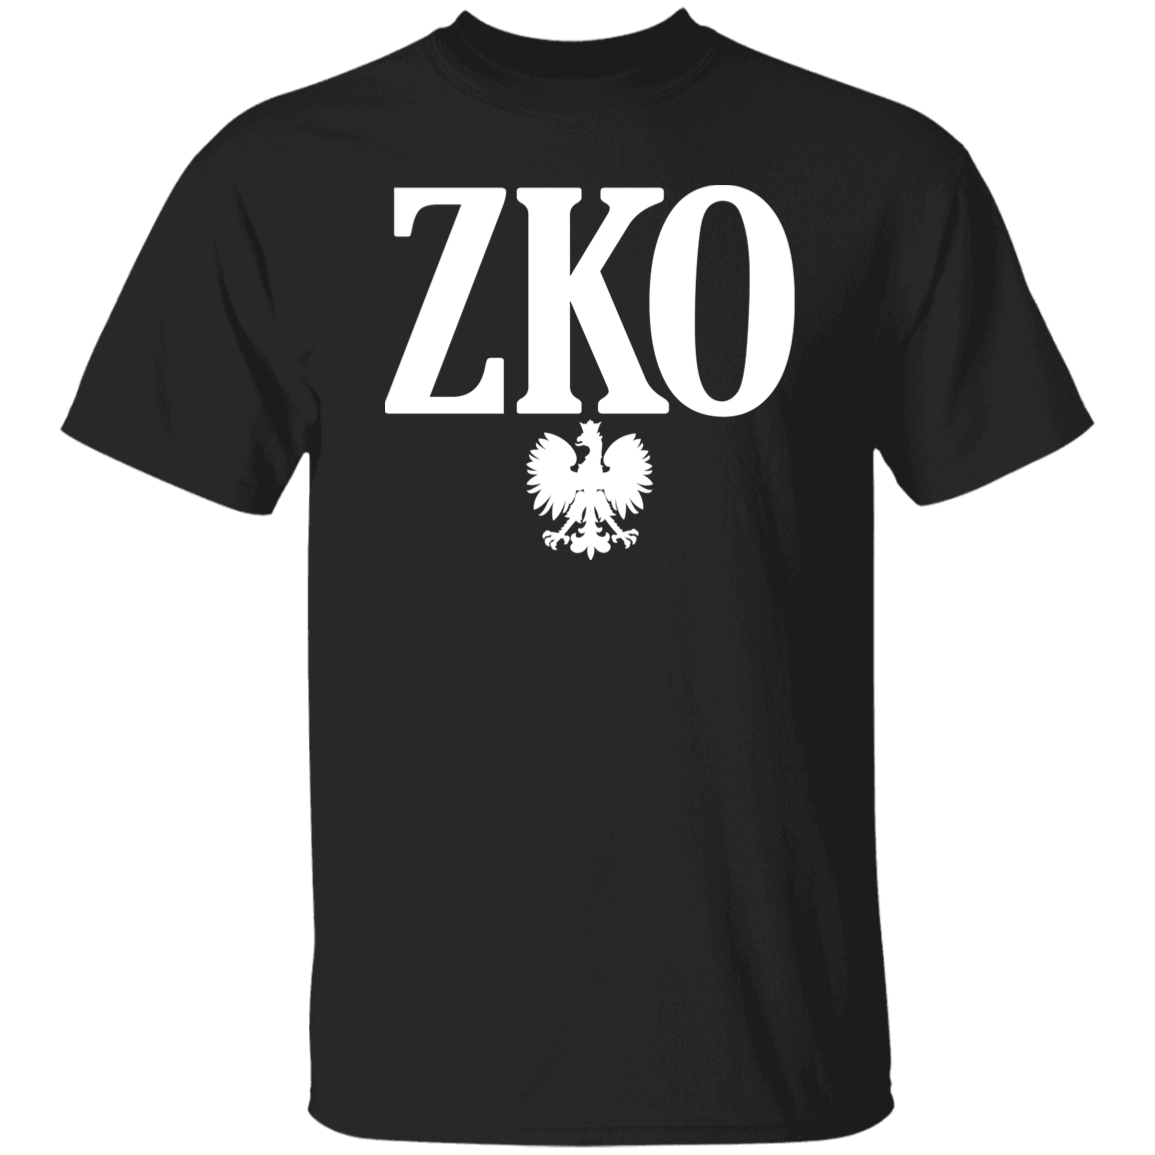 ZKO Polish Surname Ending Apparel CustomCat G500 5.3 oz. T-Shirt Black S